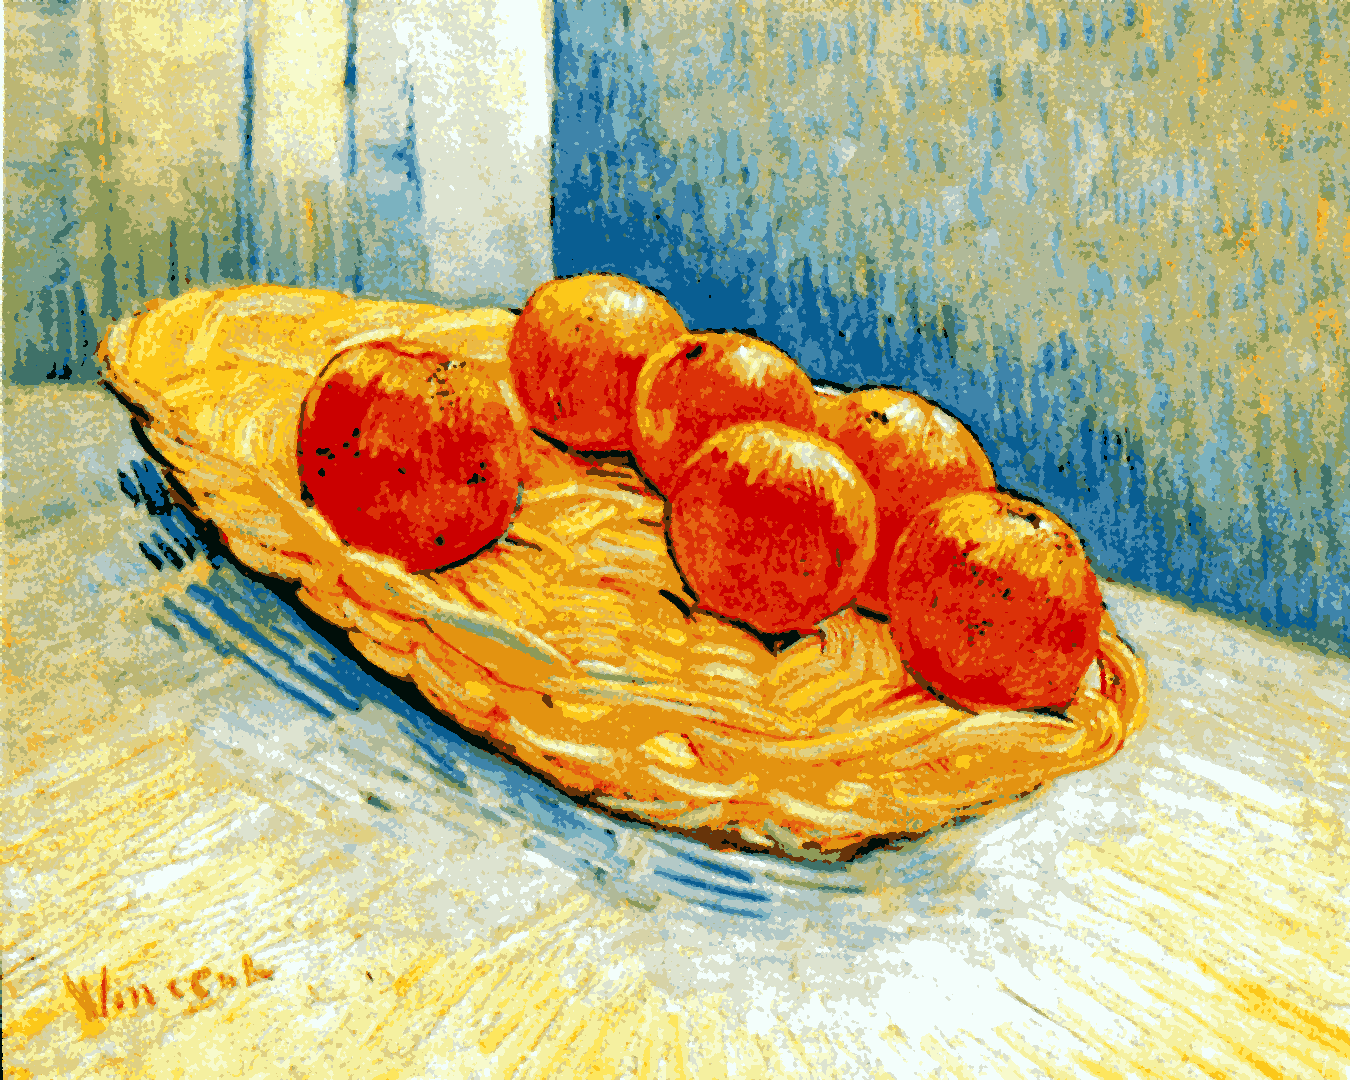 Vincent Van Gogh PD - (131) - Still Life with Oranges Basket - Van-Go Paint-By-Number Kit